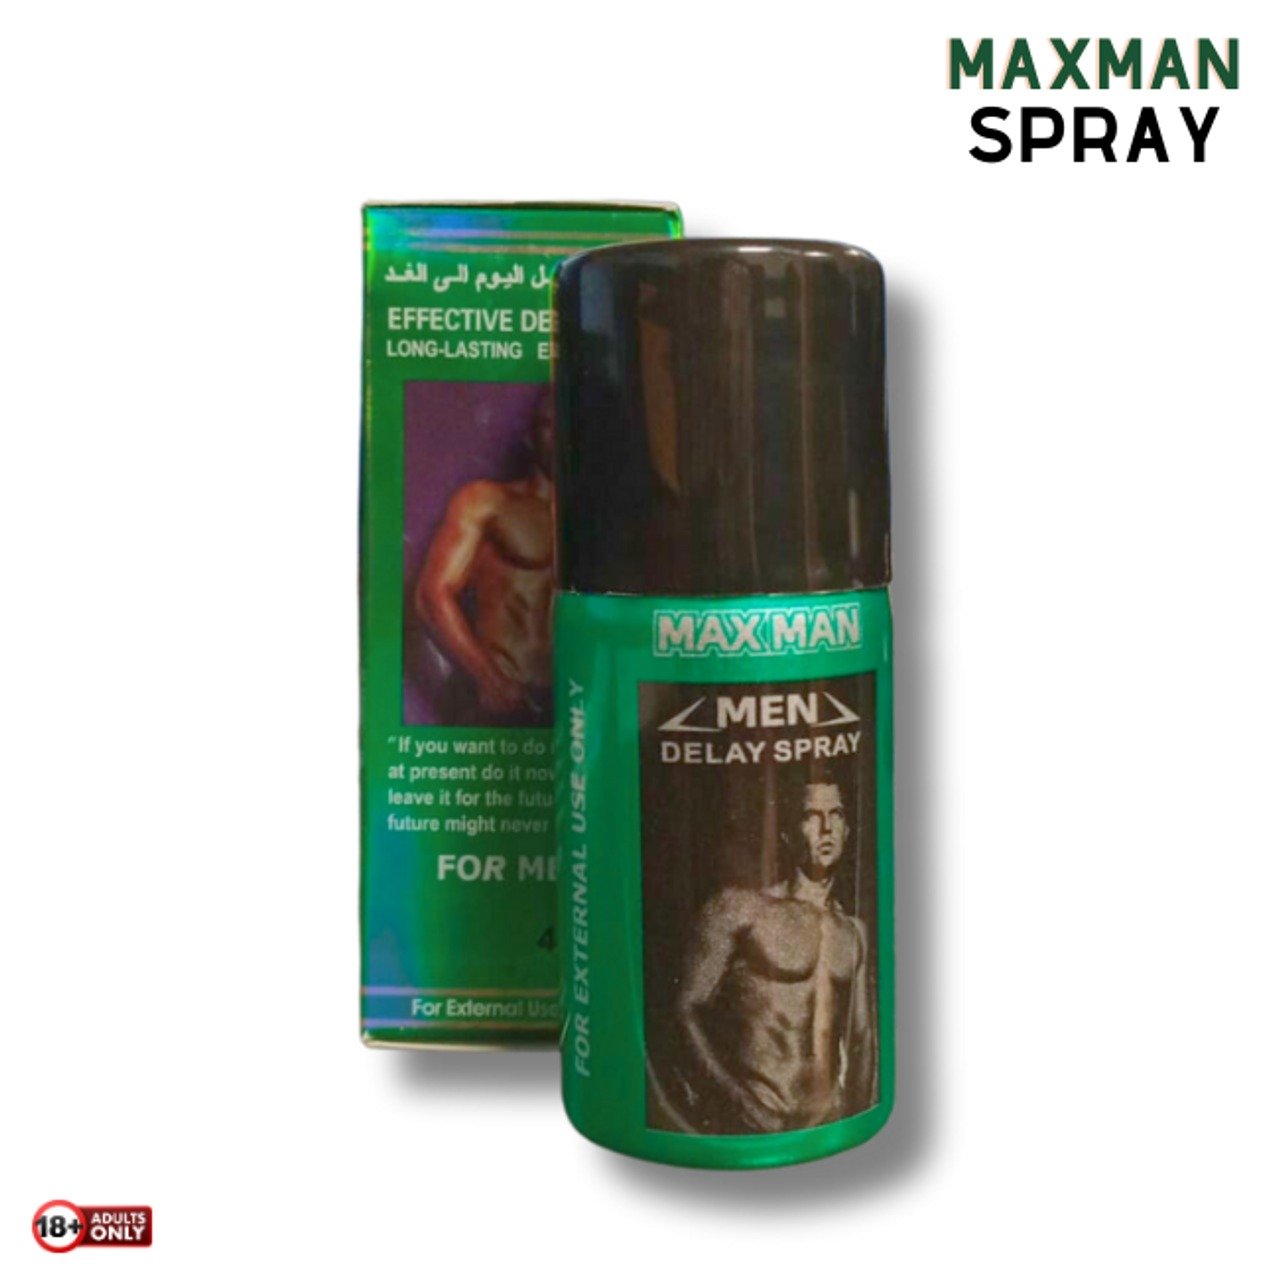 Buy Maxman Effective Long-lasting Delay Spray at Rs. 2600 from Likeshop.pk